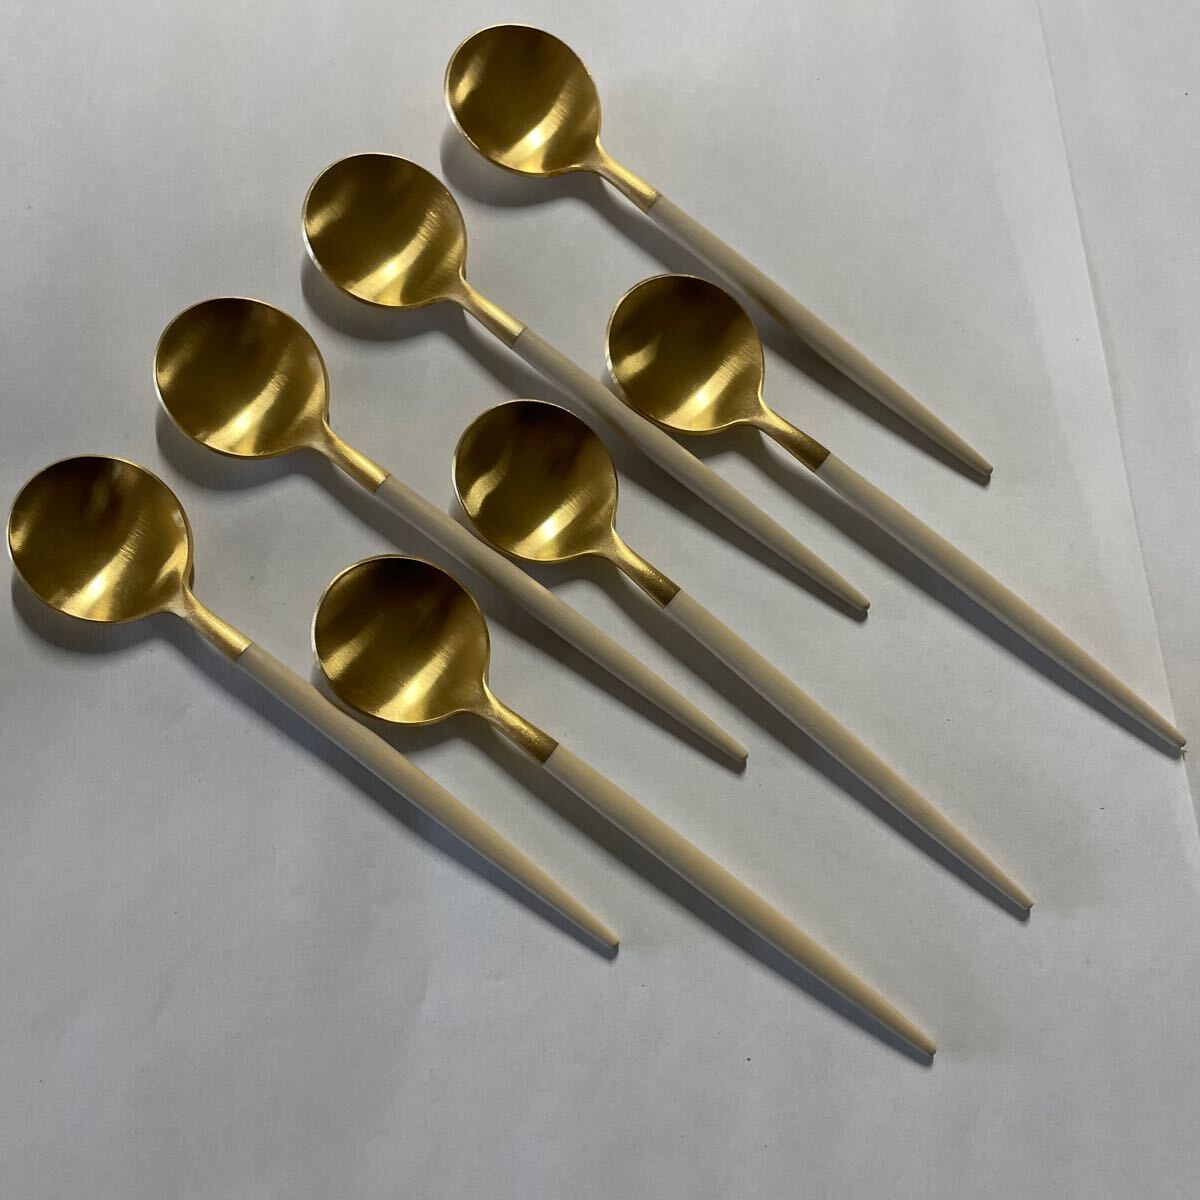 RX127 Cutipolkchi paul (pole) cutlery set goa ivory Gold spoon 7 point summarize kitchen interior unused storage goods tableware 